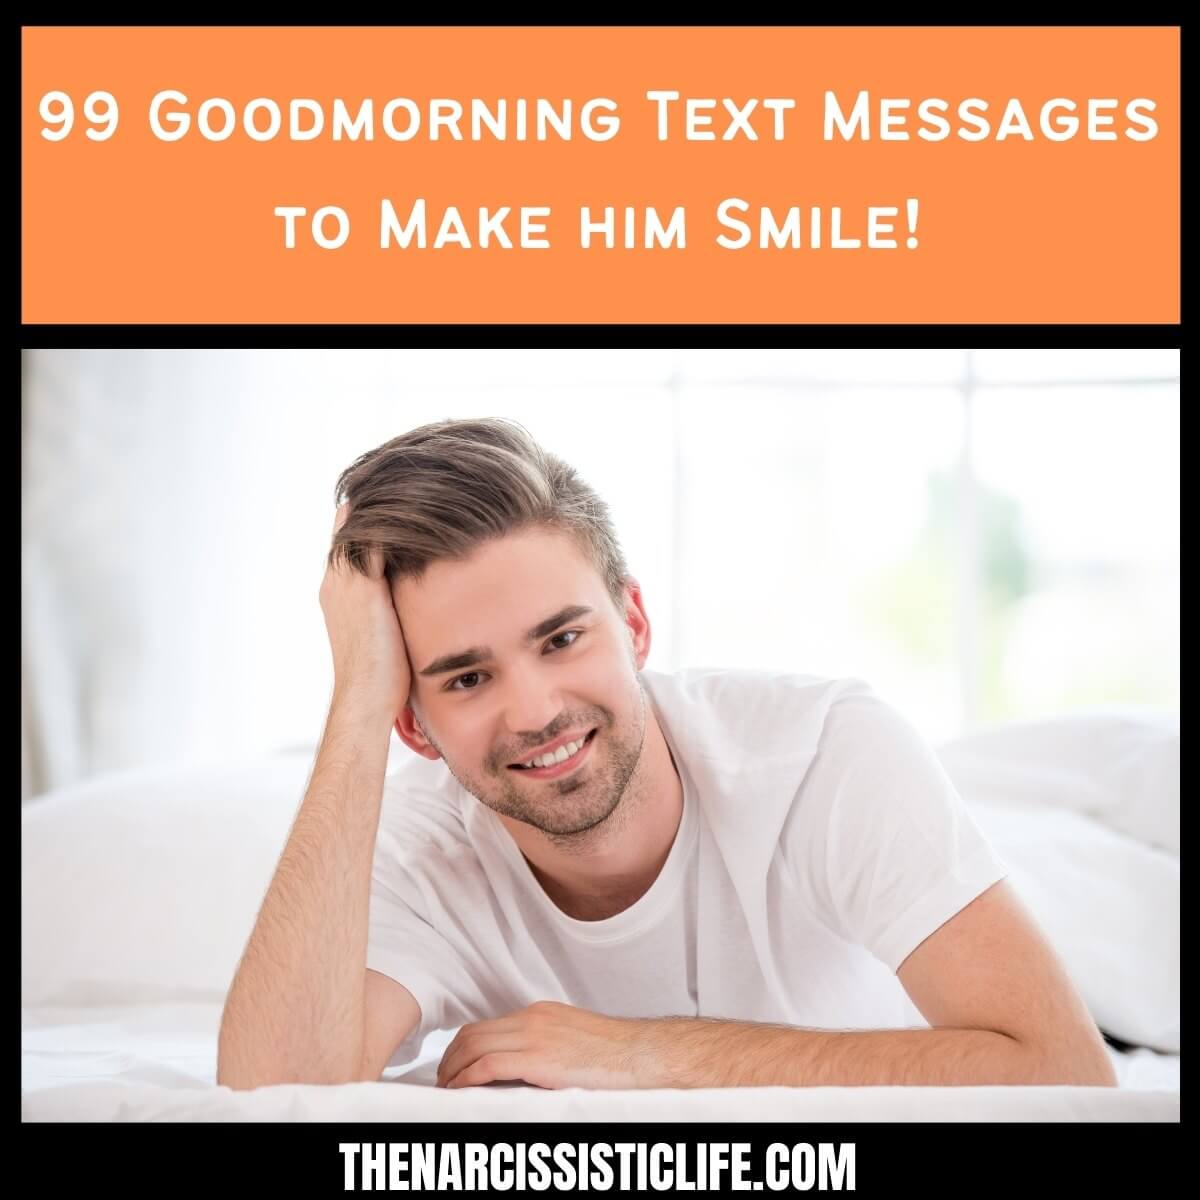 Good Morning Message for Him to Make Him Smile